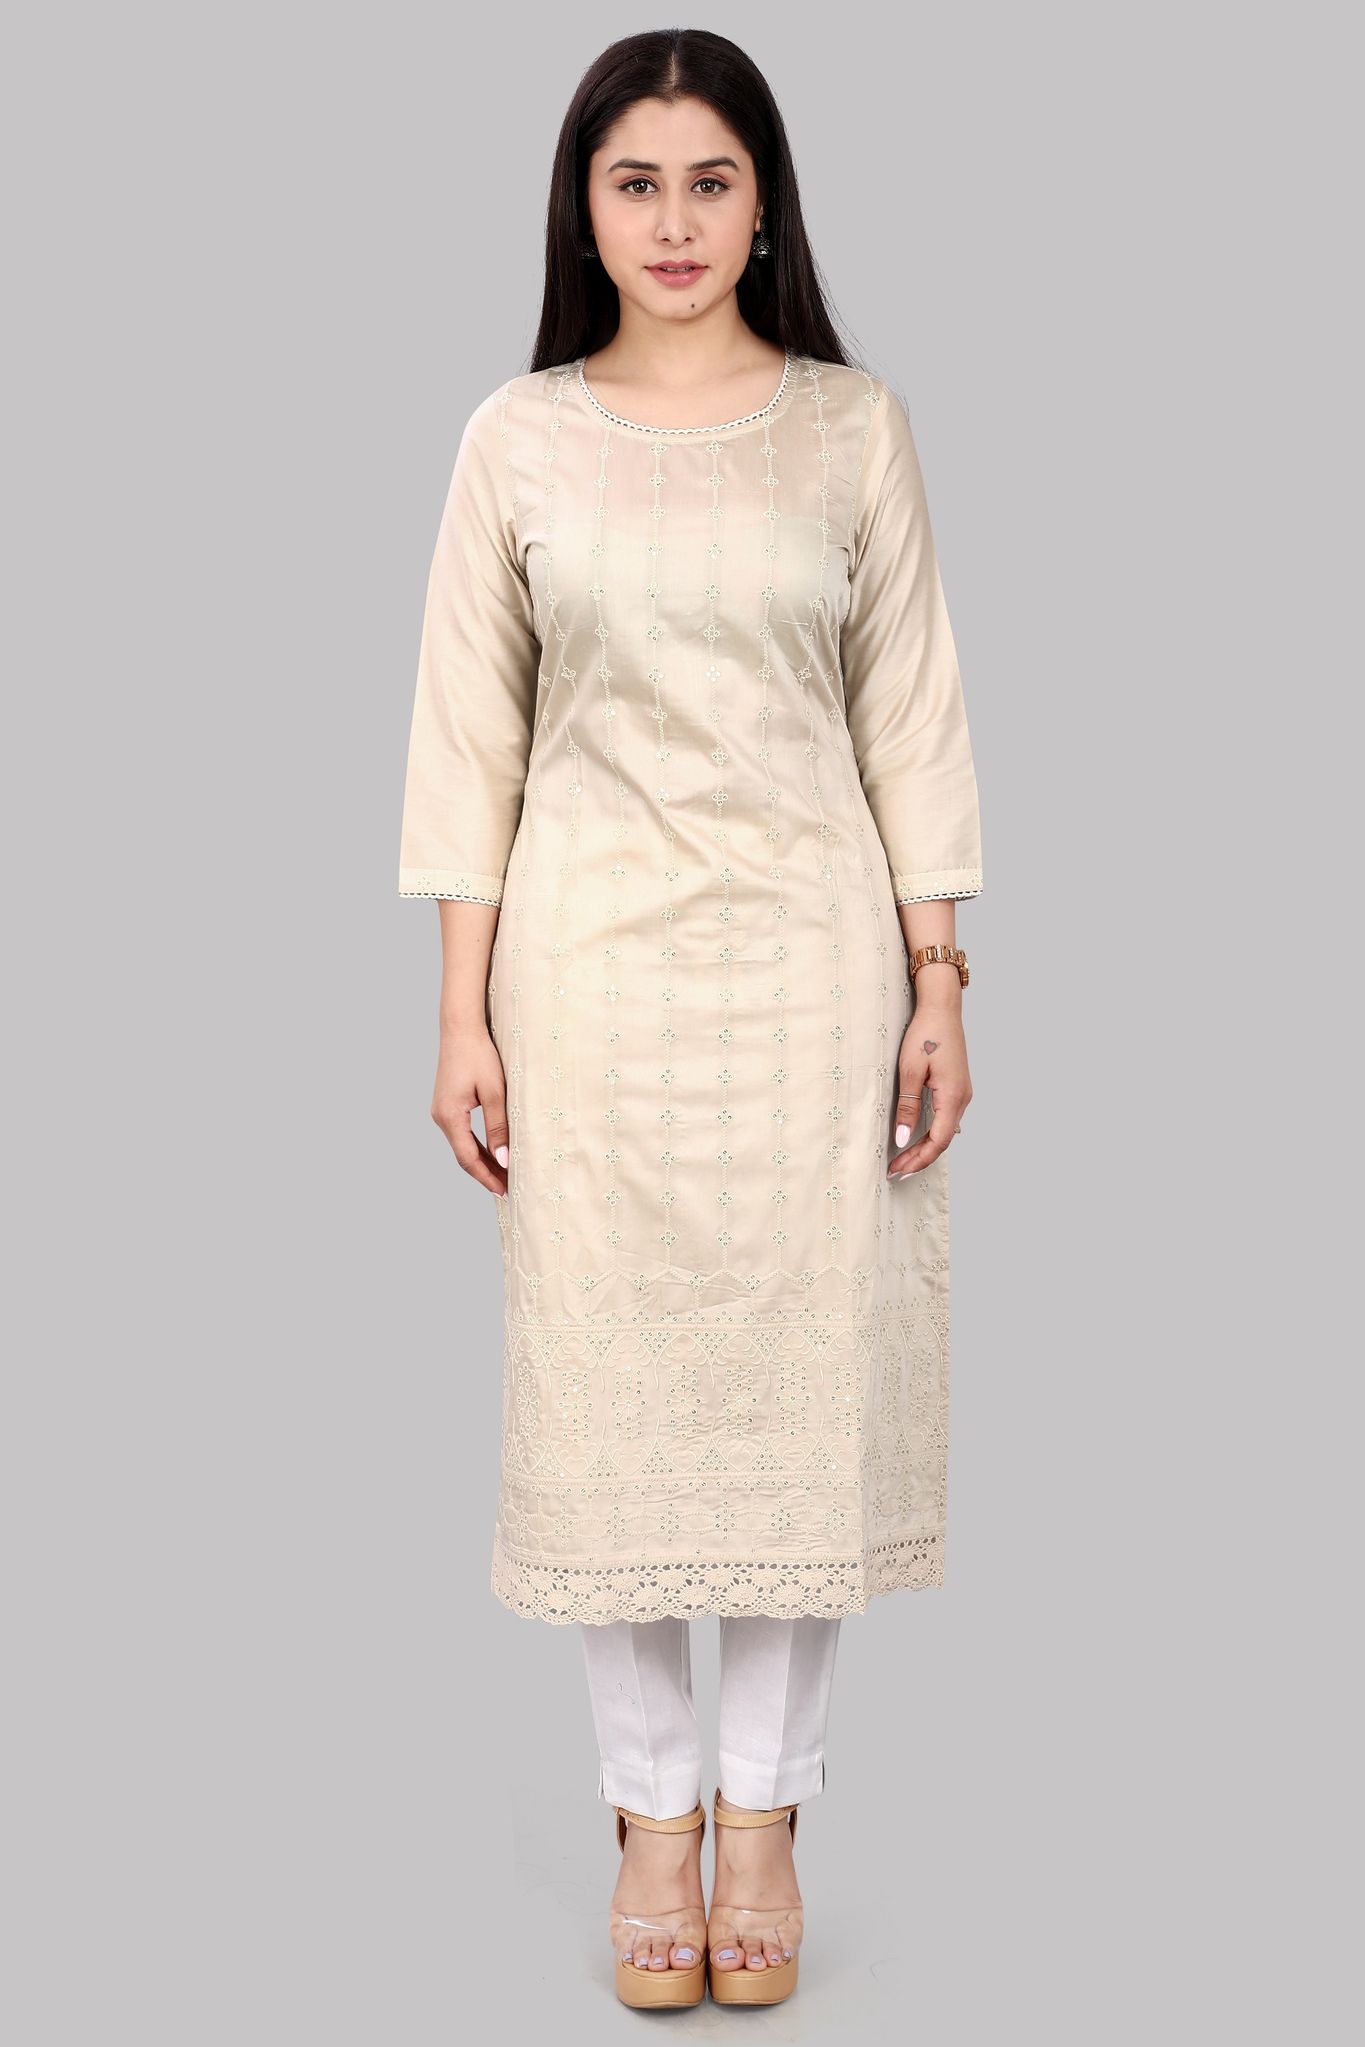 Ghazal Cream Embroidered Cotton Silk Straight Kurtis